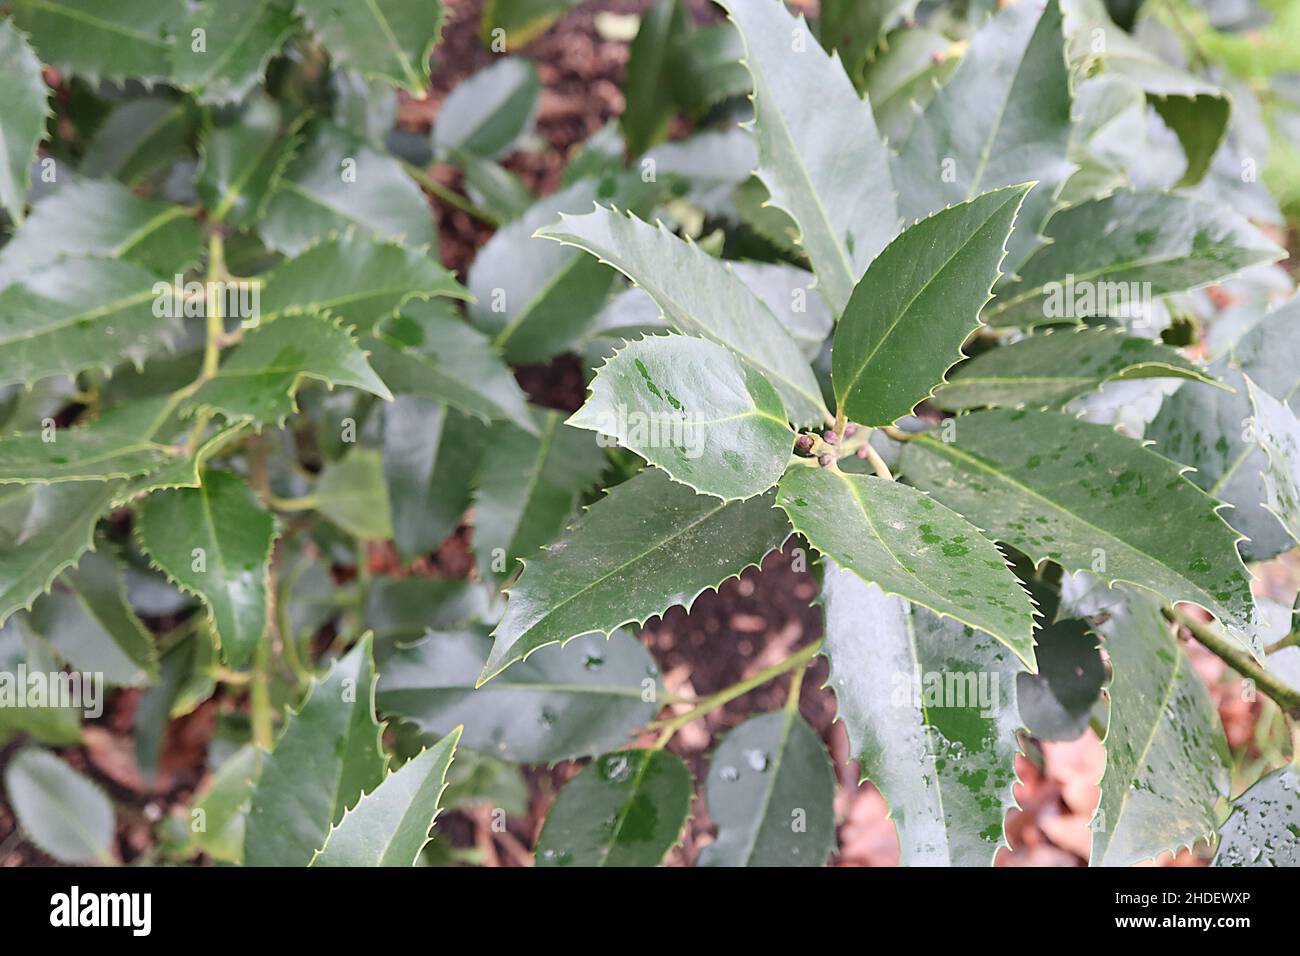 Ilex x koehneana ‘Chestnut Leaf’ holly Chestnut Leaf – dark green chestnut-like leaves with evenly spaced spiny margins,  January, England, UK Stock Photo